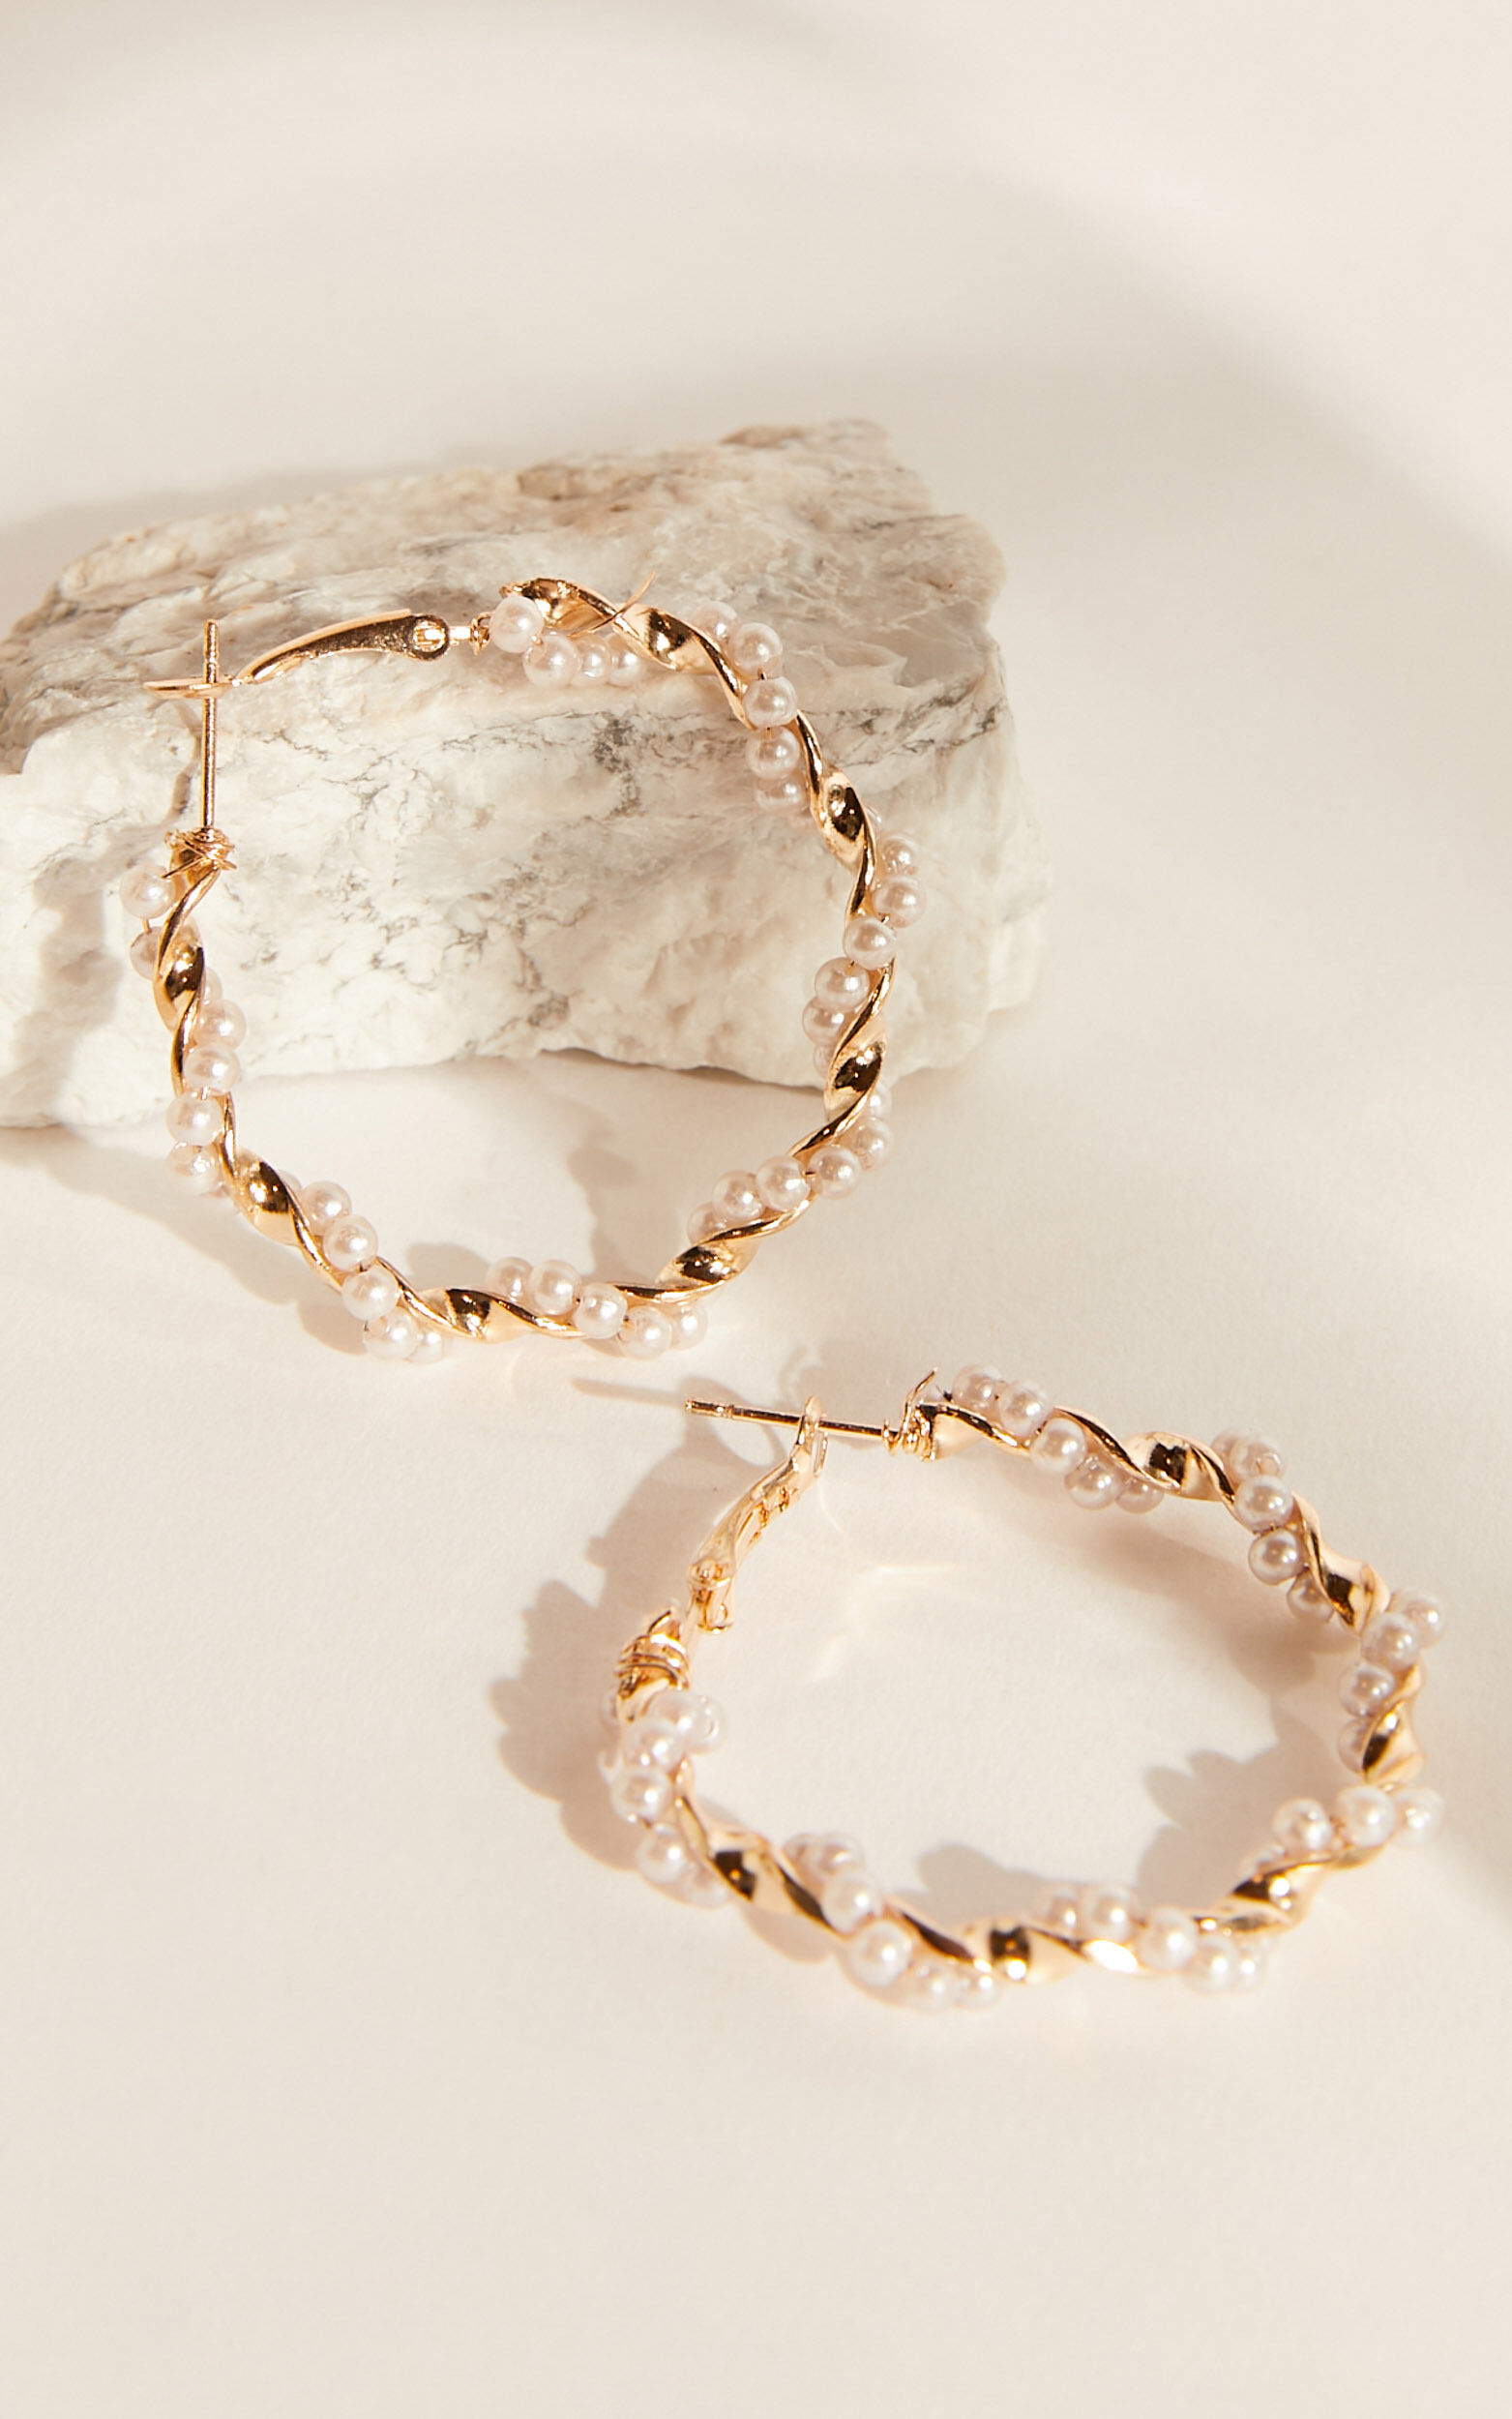 Bev Hoop Earrings in Gold and Pearl - NoSize, GLD1